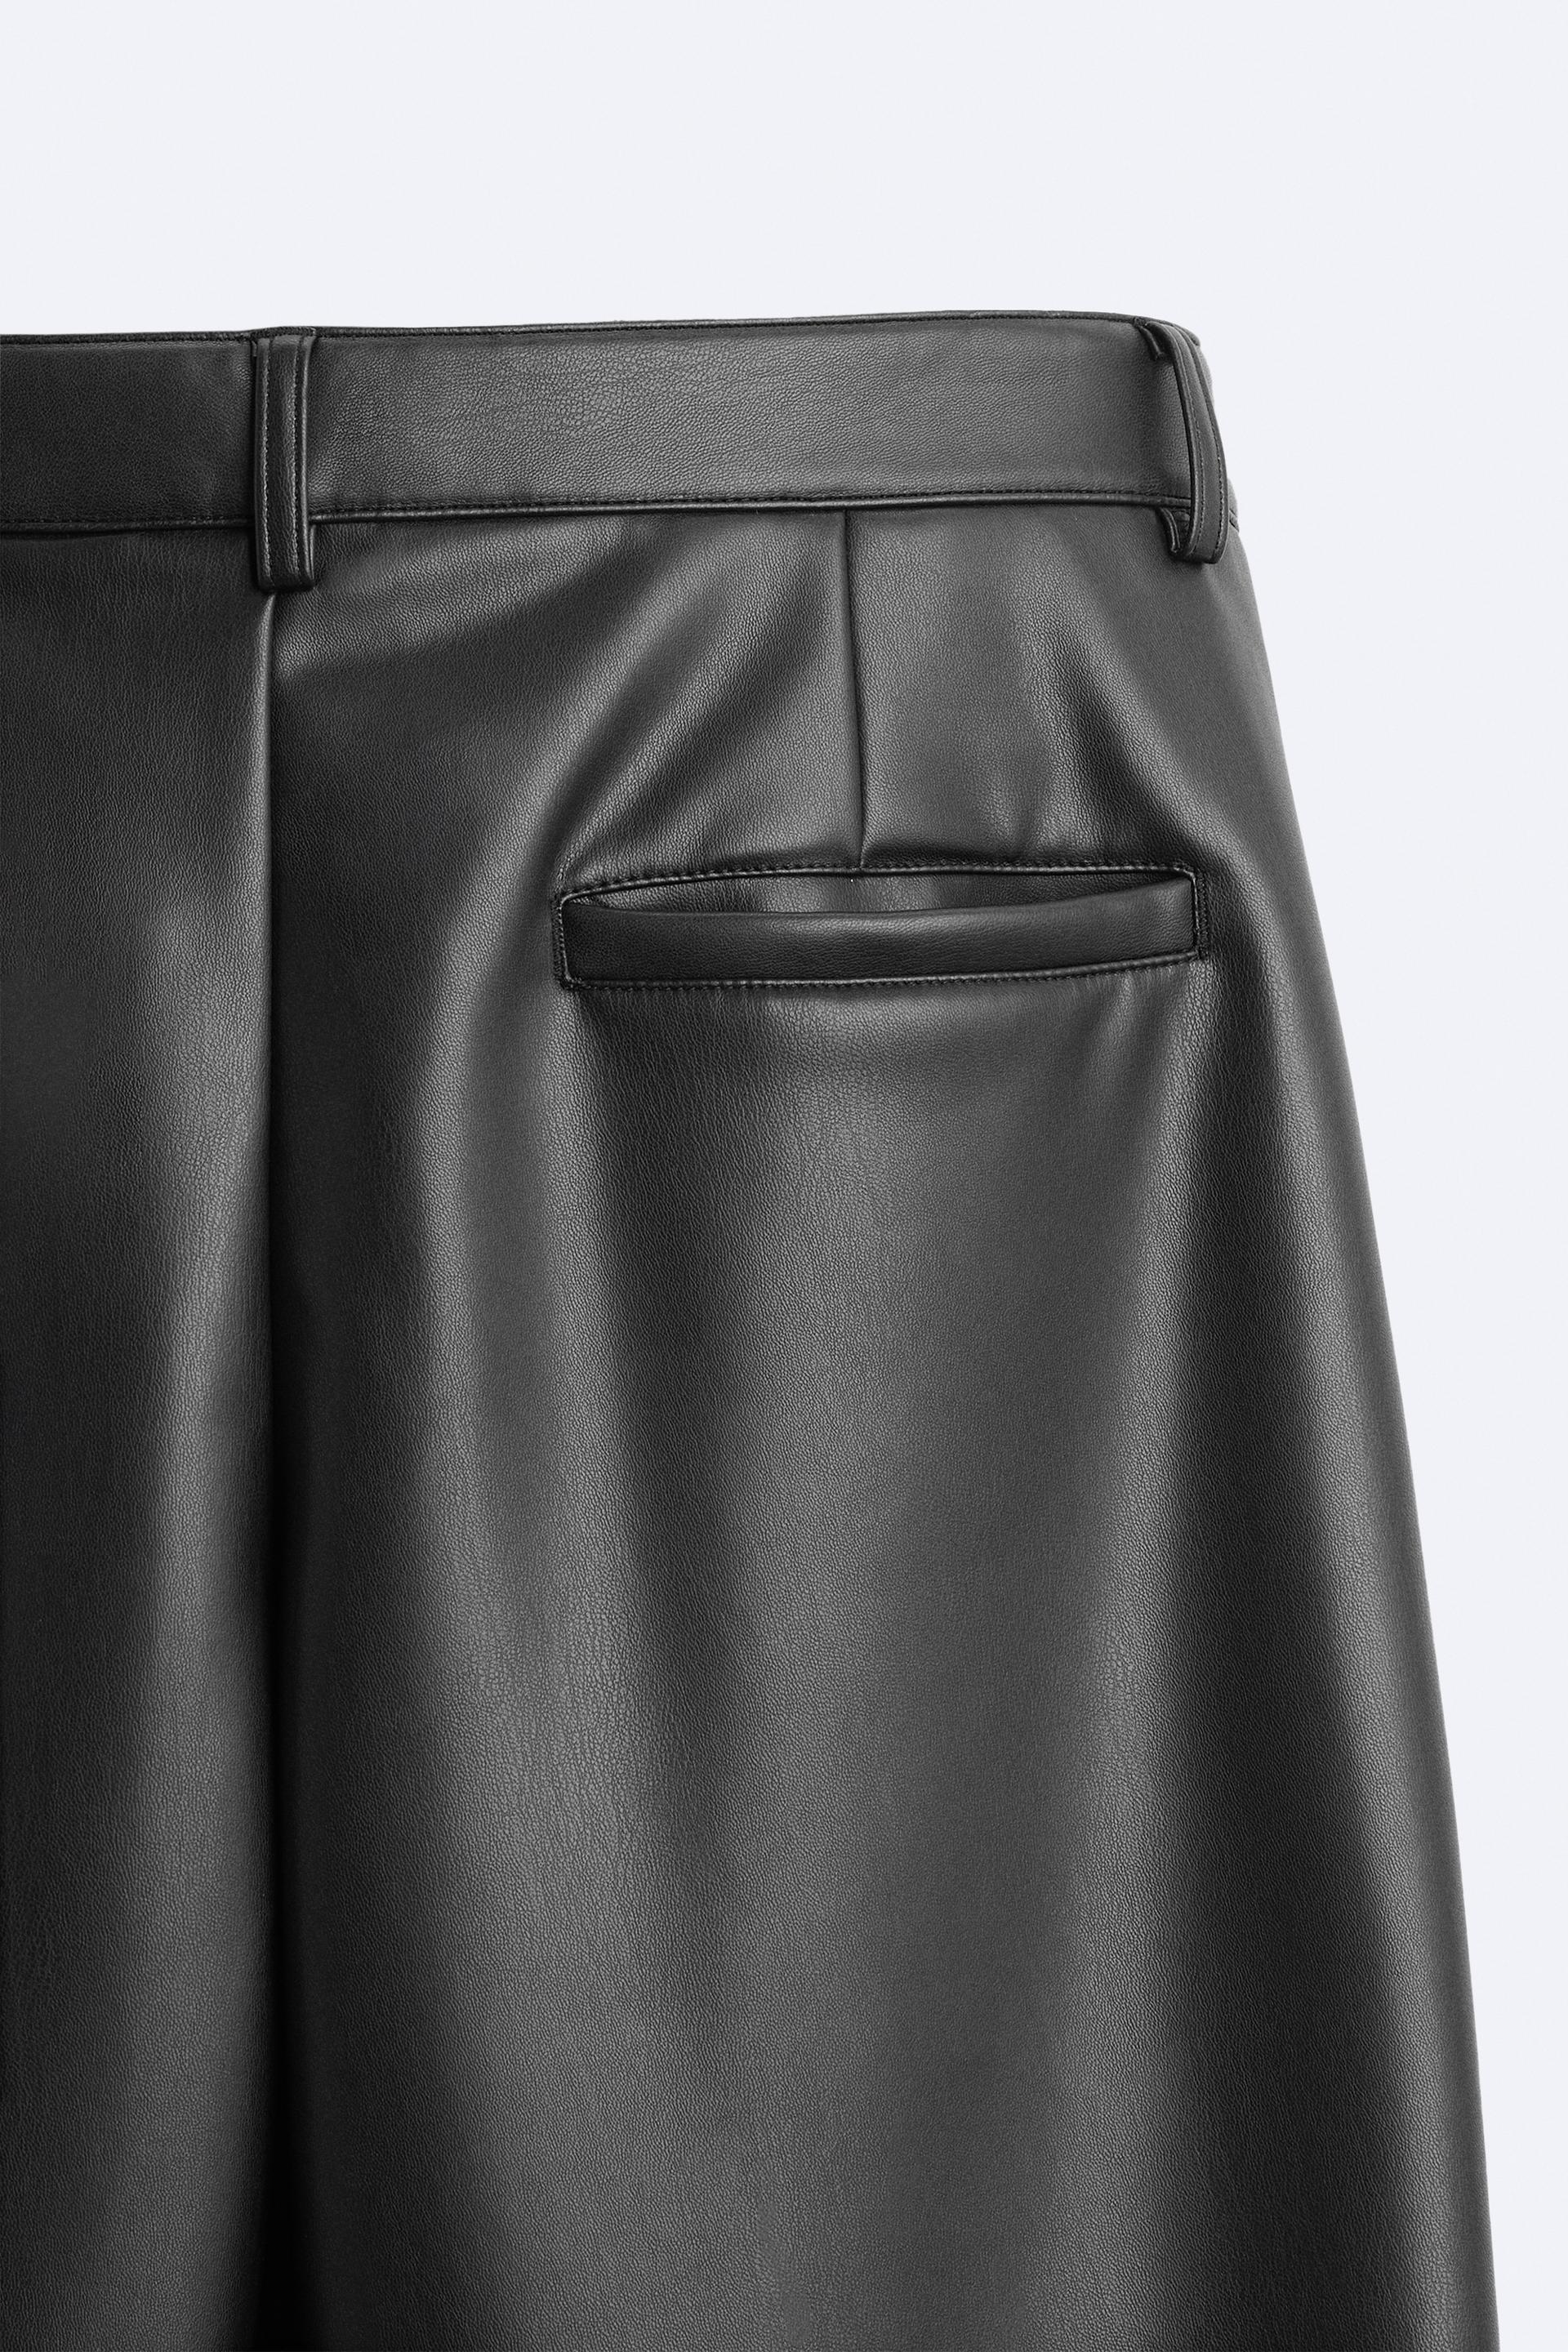 Zara, Pants & Jumpsuits, Nwt Zara Full Length Faux Leather Francoise Pants